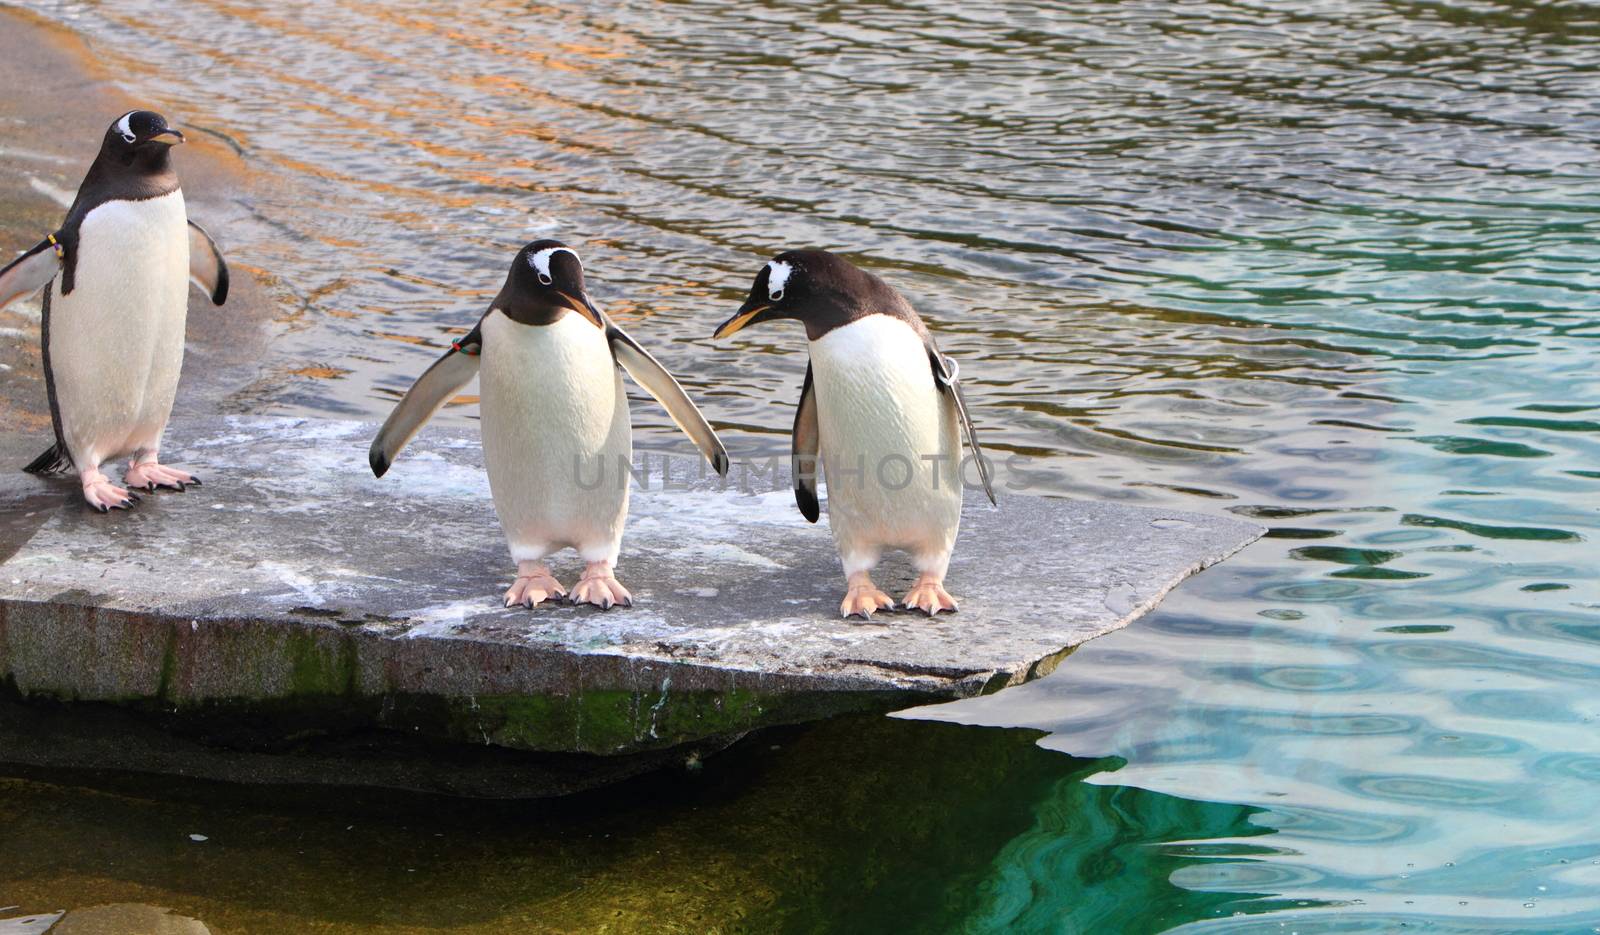 Gentoo penguins by mitzy